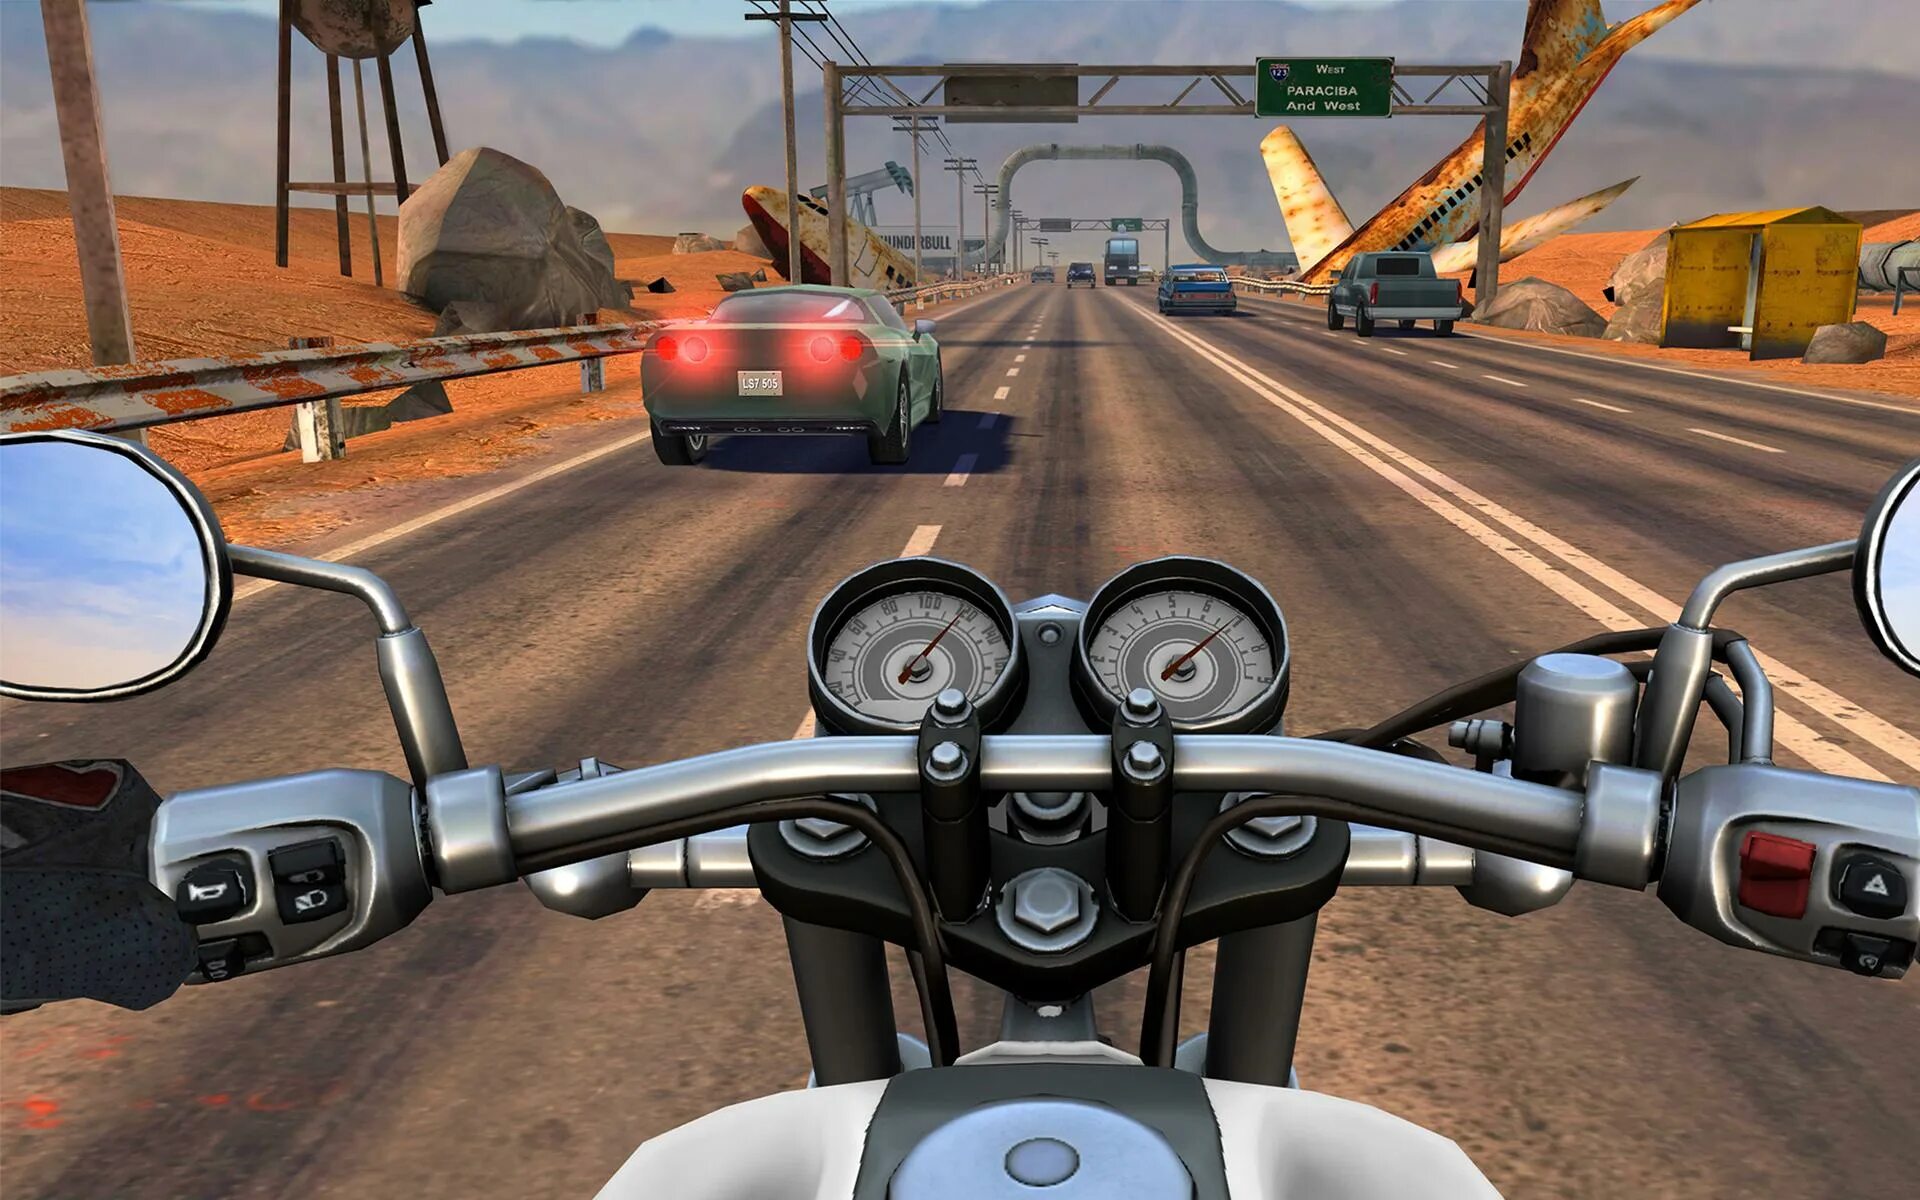 Moto Rider игра. Игра Traffic Racer Moto. Игра Racing Fever Moto. Мопед игра Traffic Rider. Игры про гонки на мотоциклах